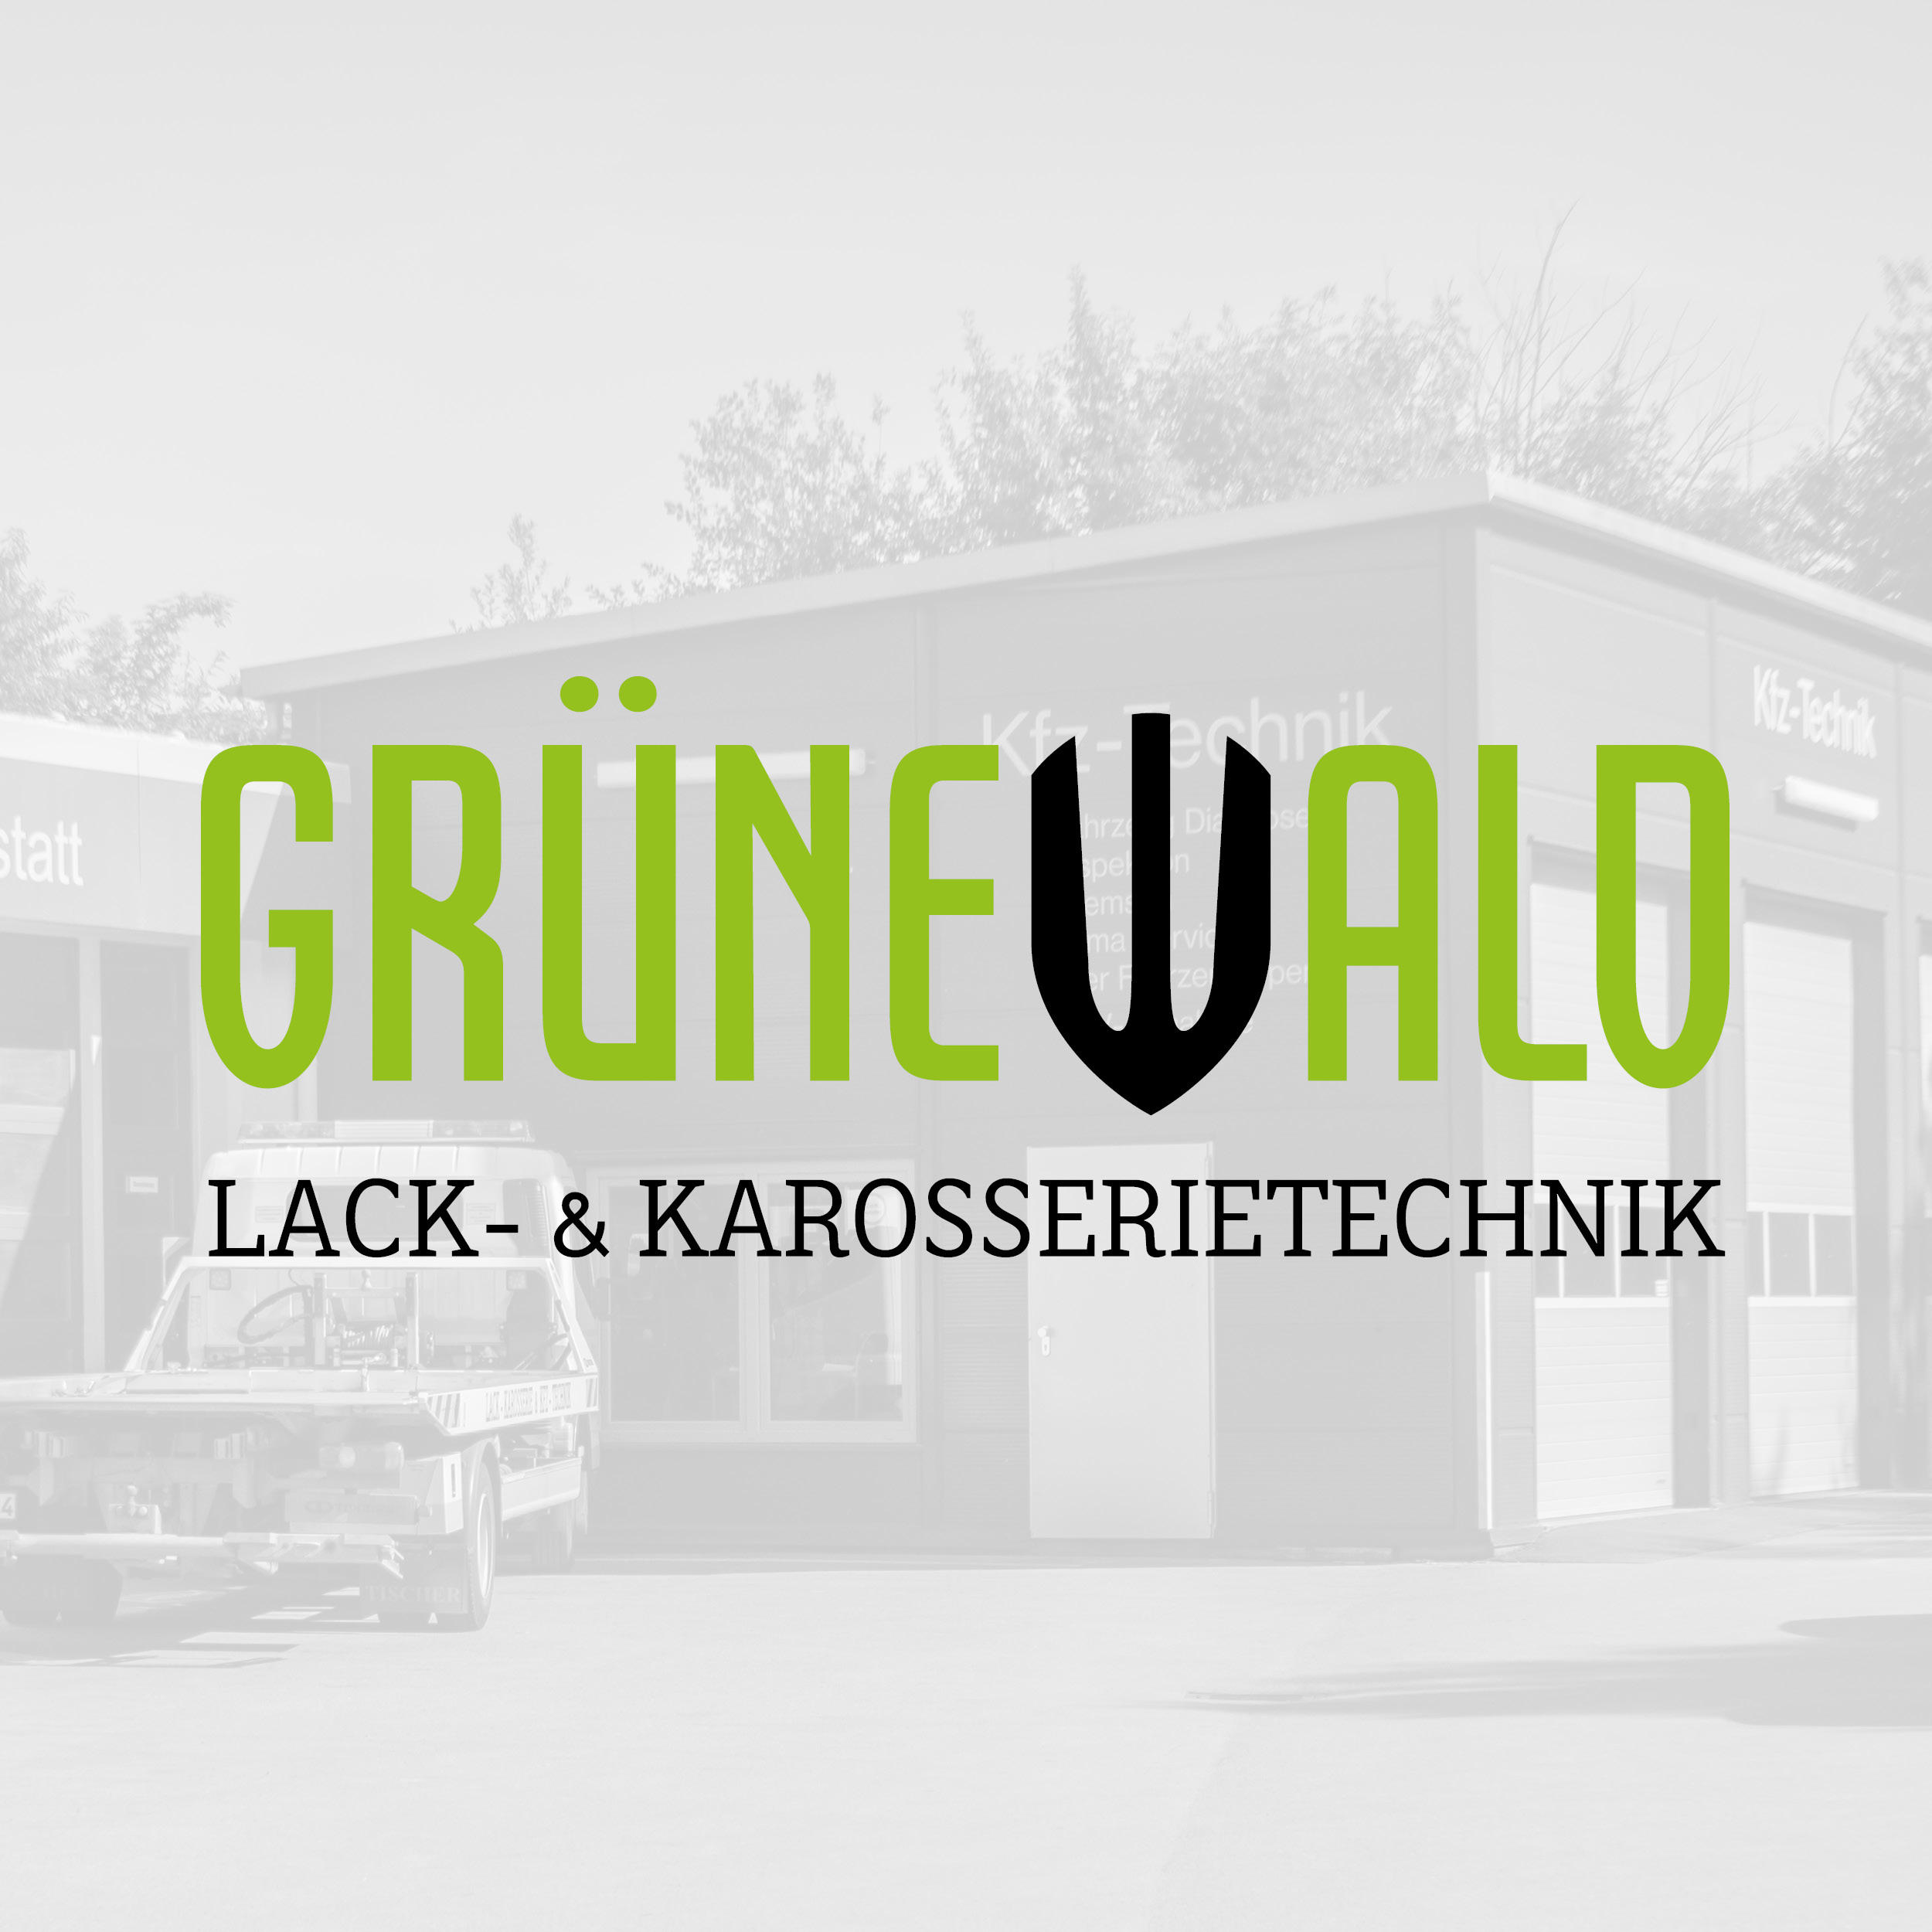 Lack- und Karosserietechnik Grünewald Maximilian Achenbach GmbH in Bochum - Logo